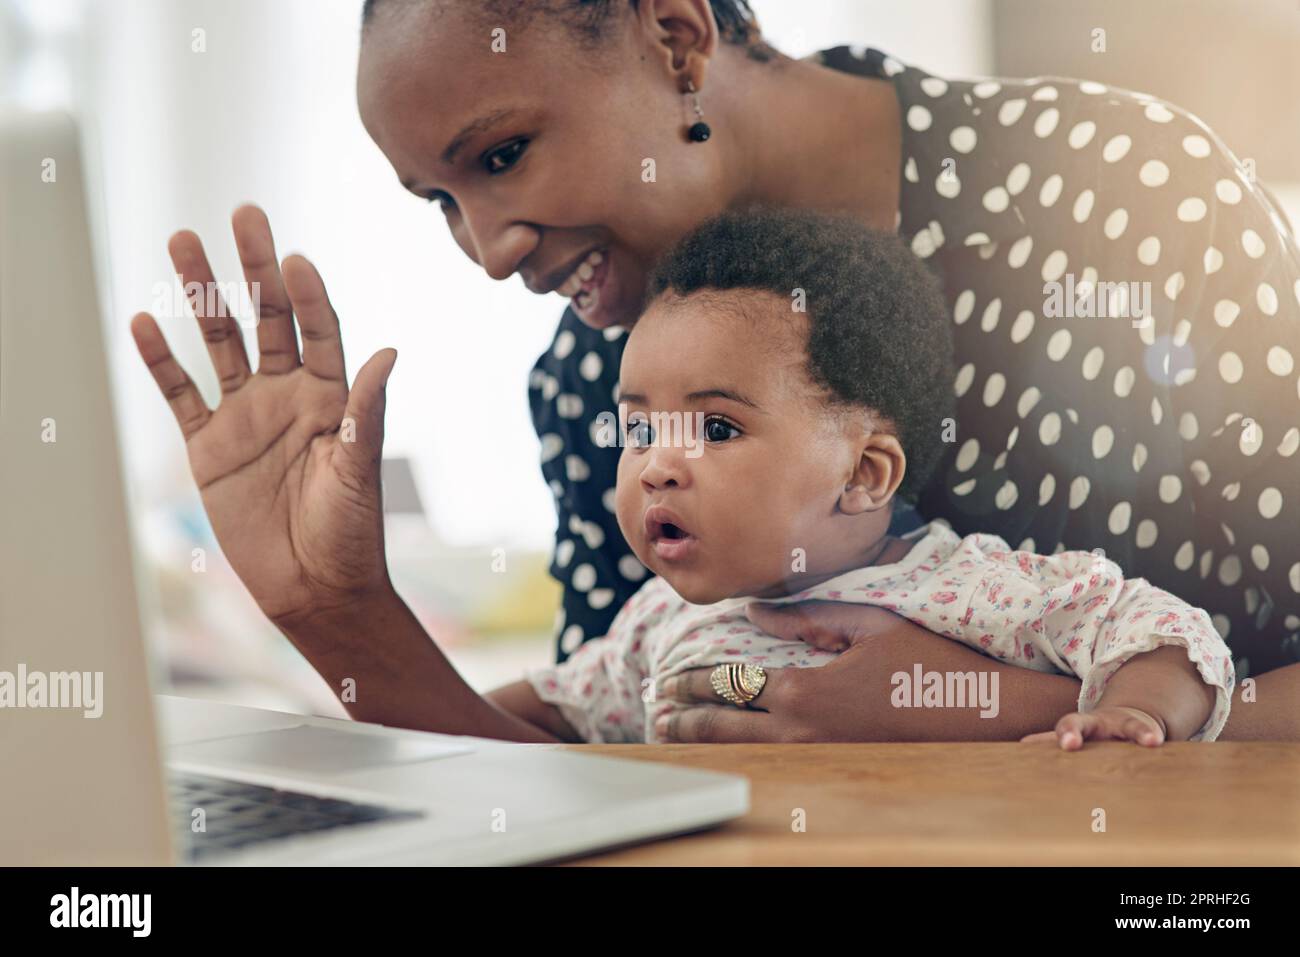 Curious Preschool African Mixed Race Girl Using Laptop at Home